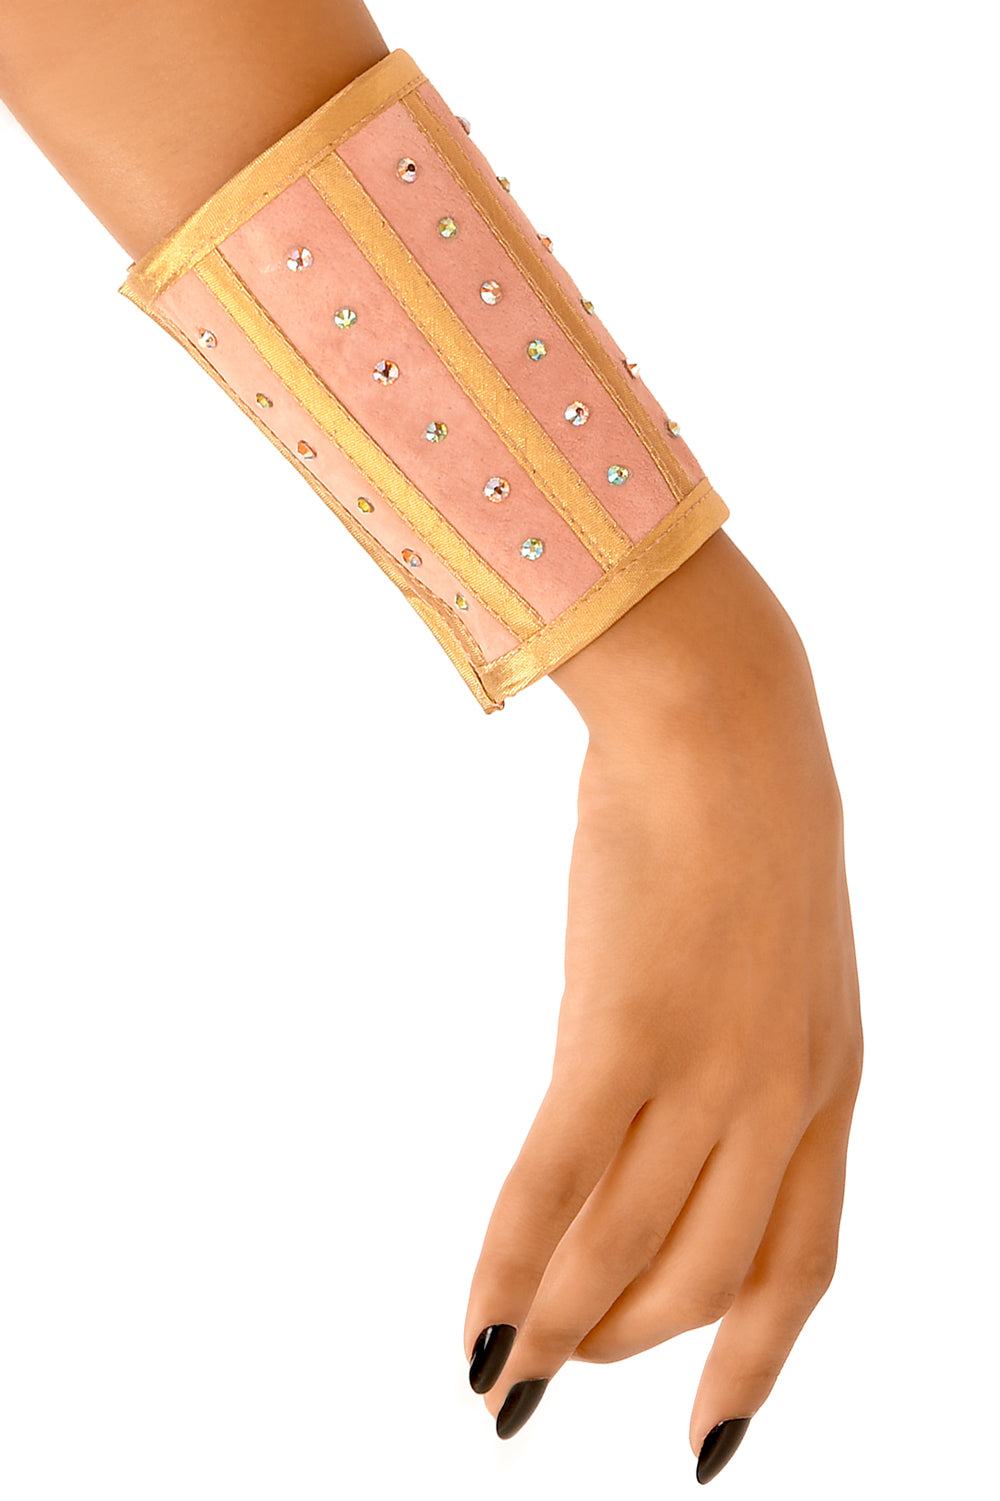 Nefertiri Wrist Cuffs (Pair)